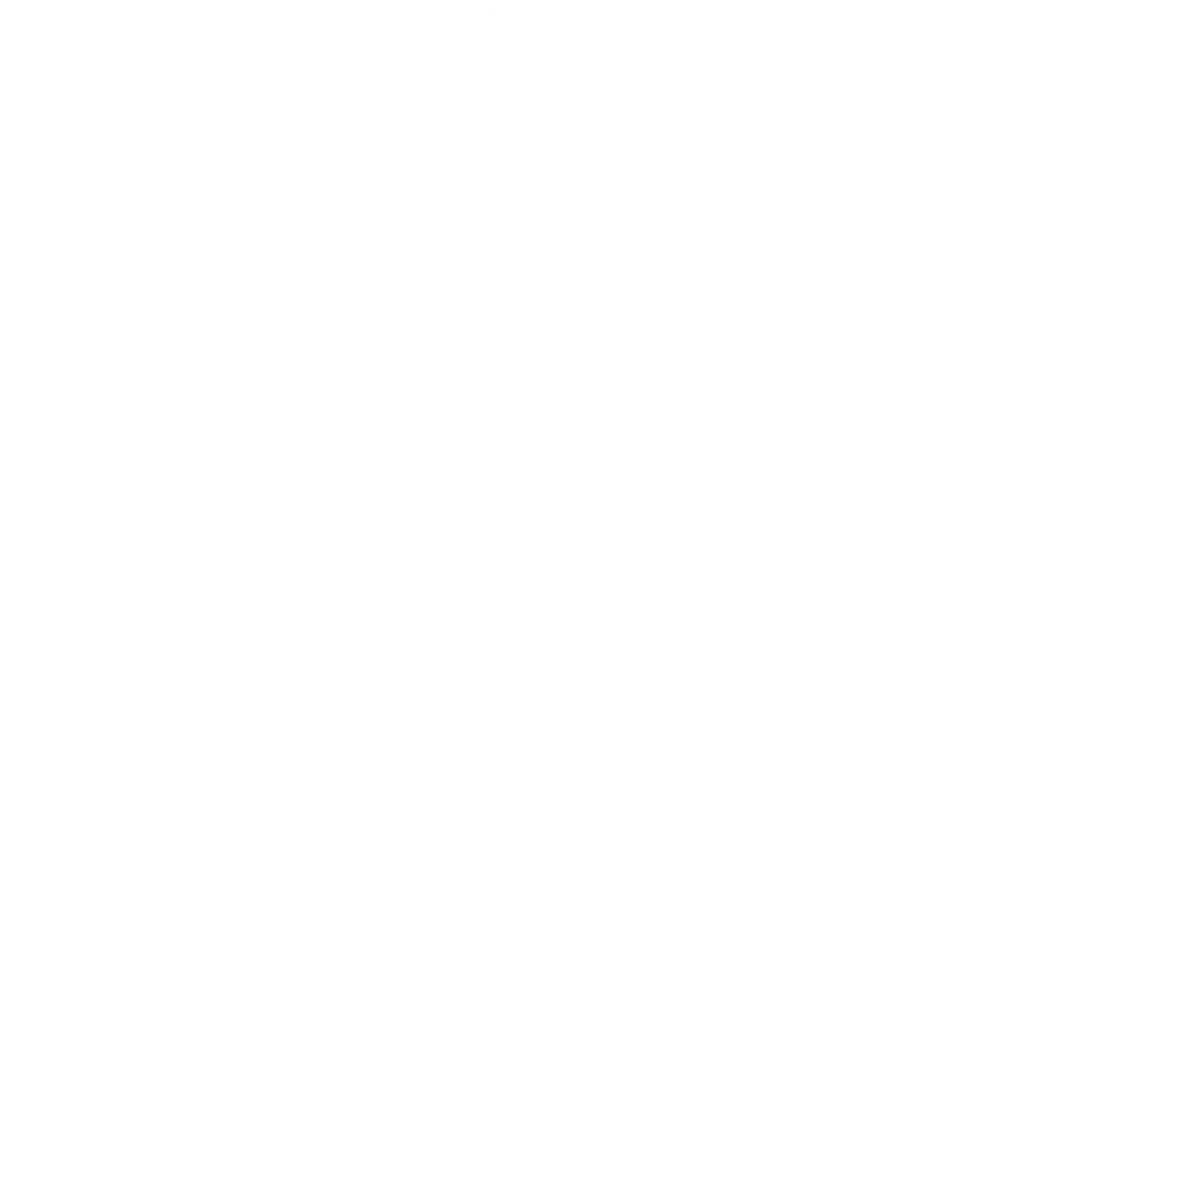 Tiny Tipper & Wheelchair Van Hire